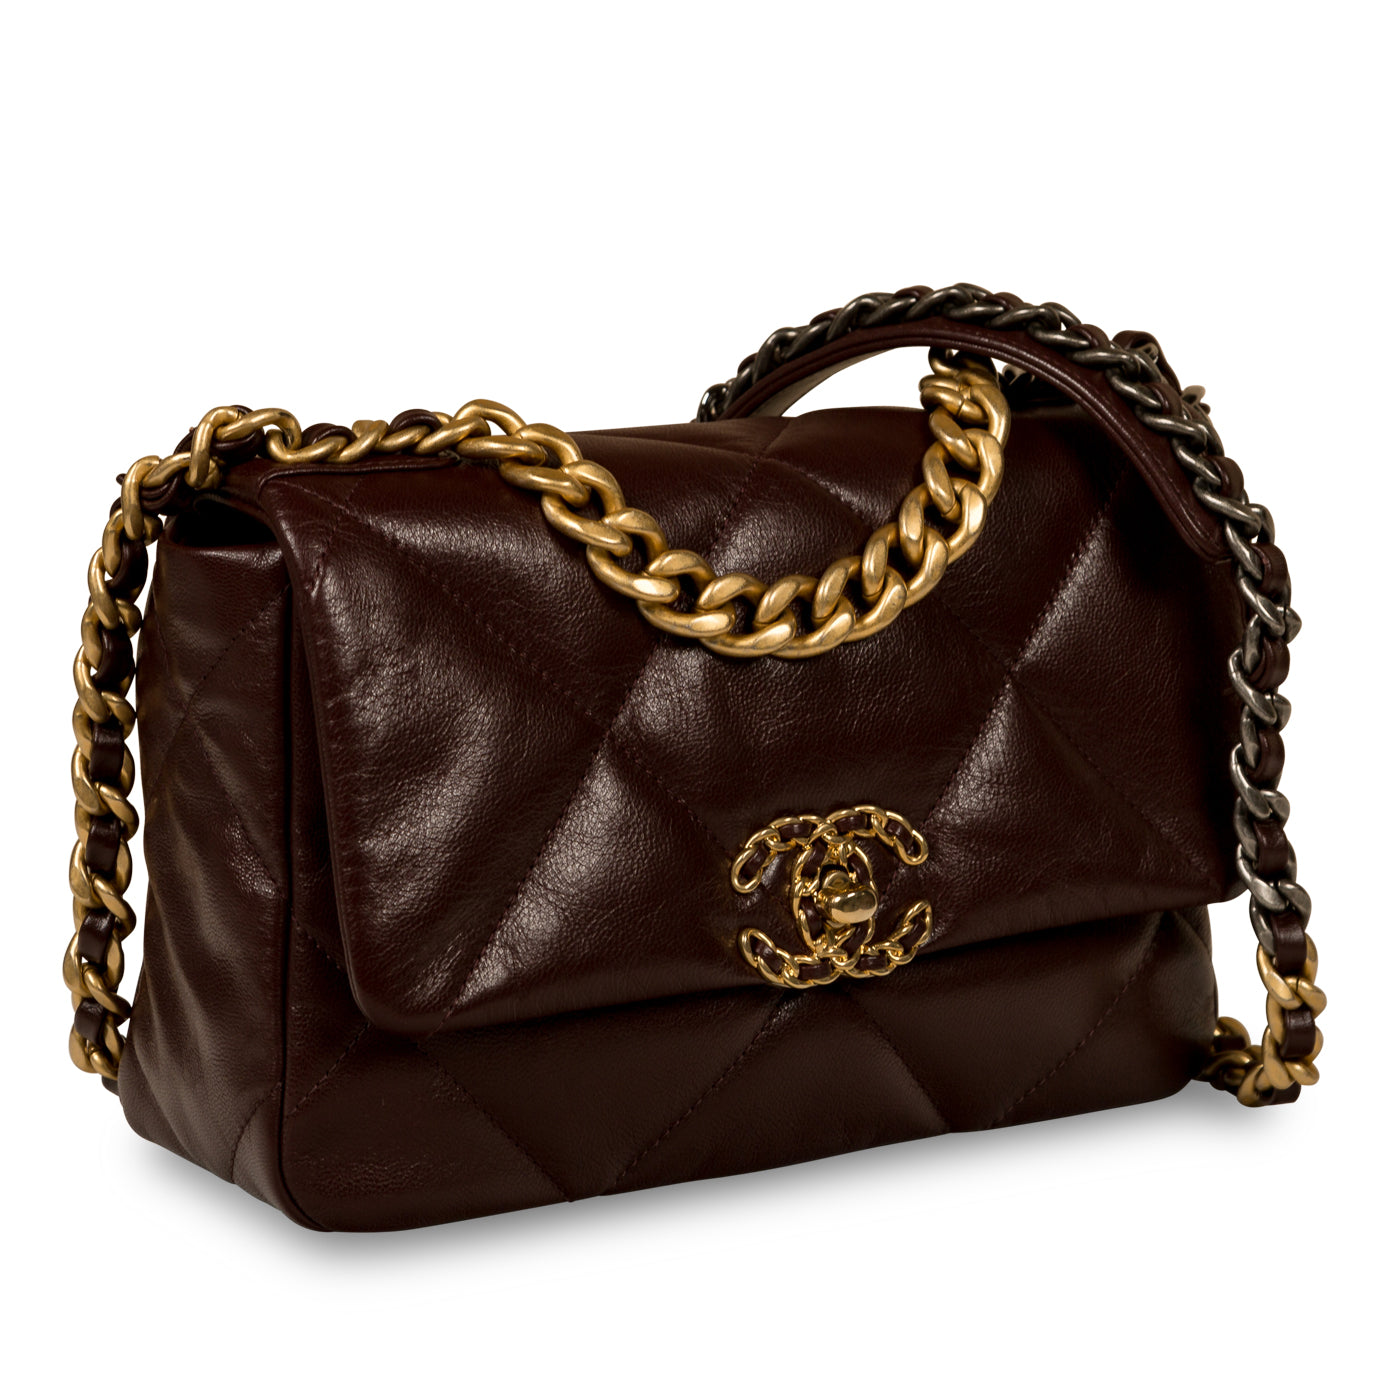 Chanel - Chanel 19 Flap Bag - Small - Burgundy